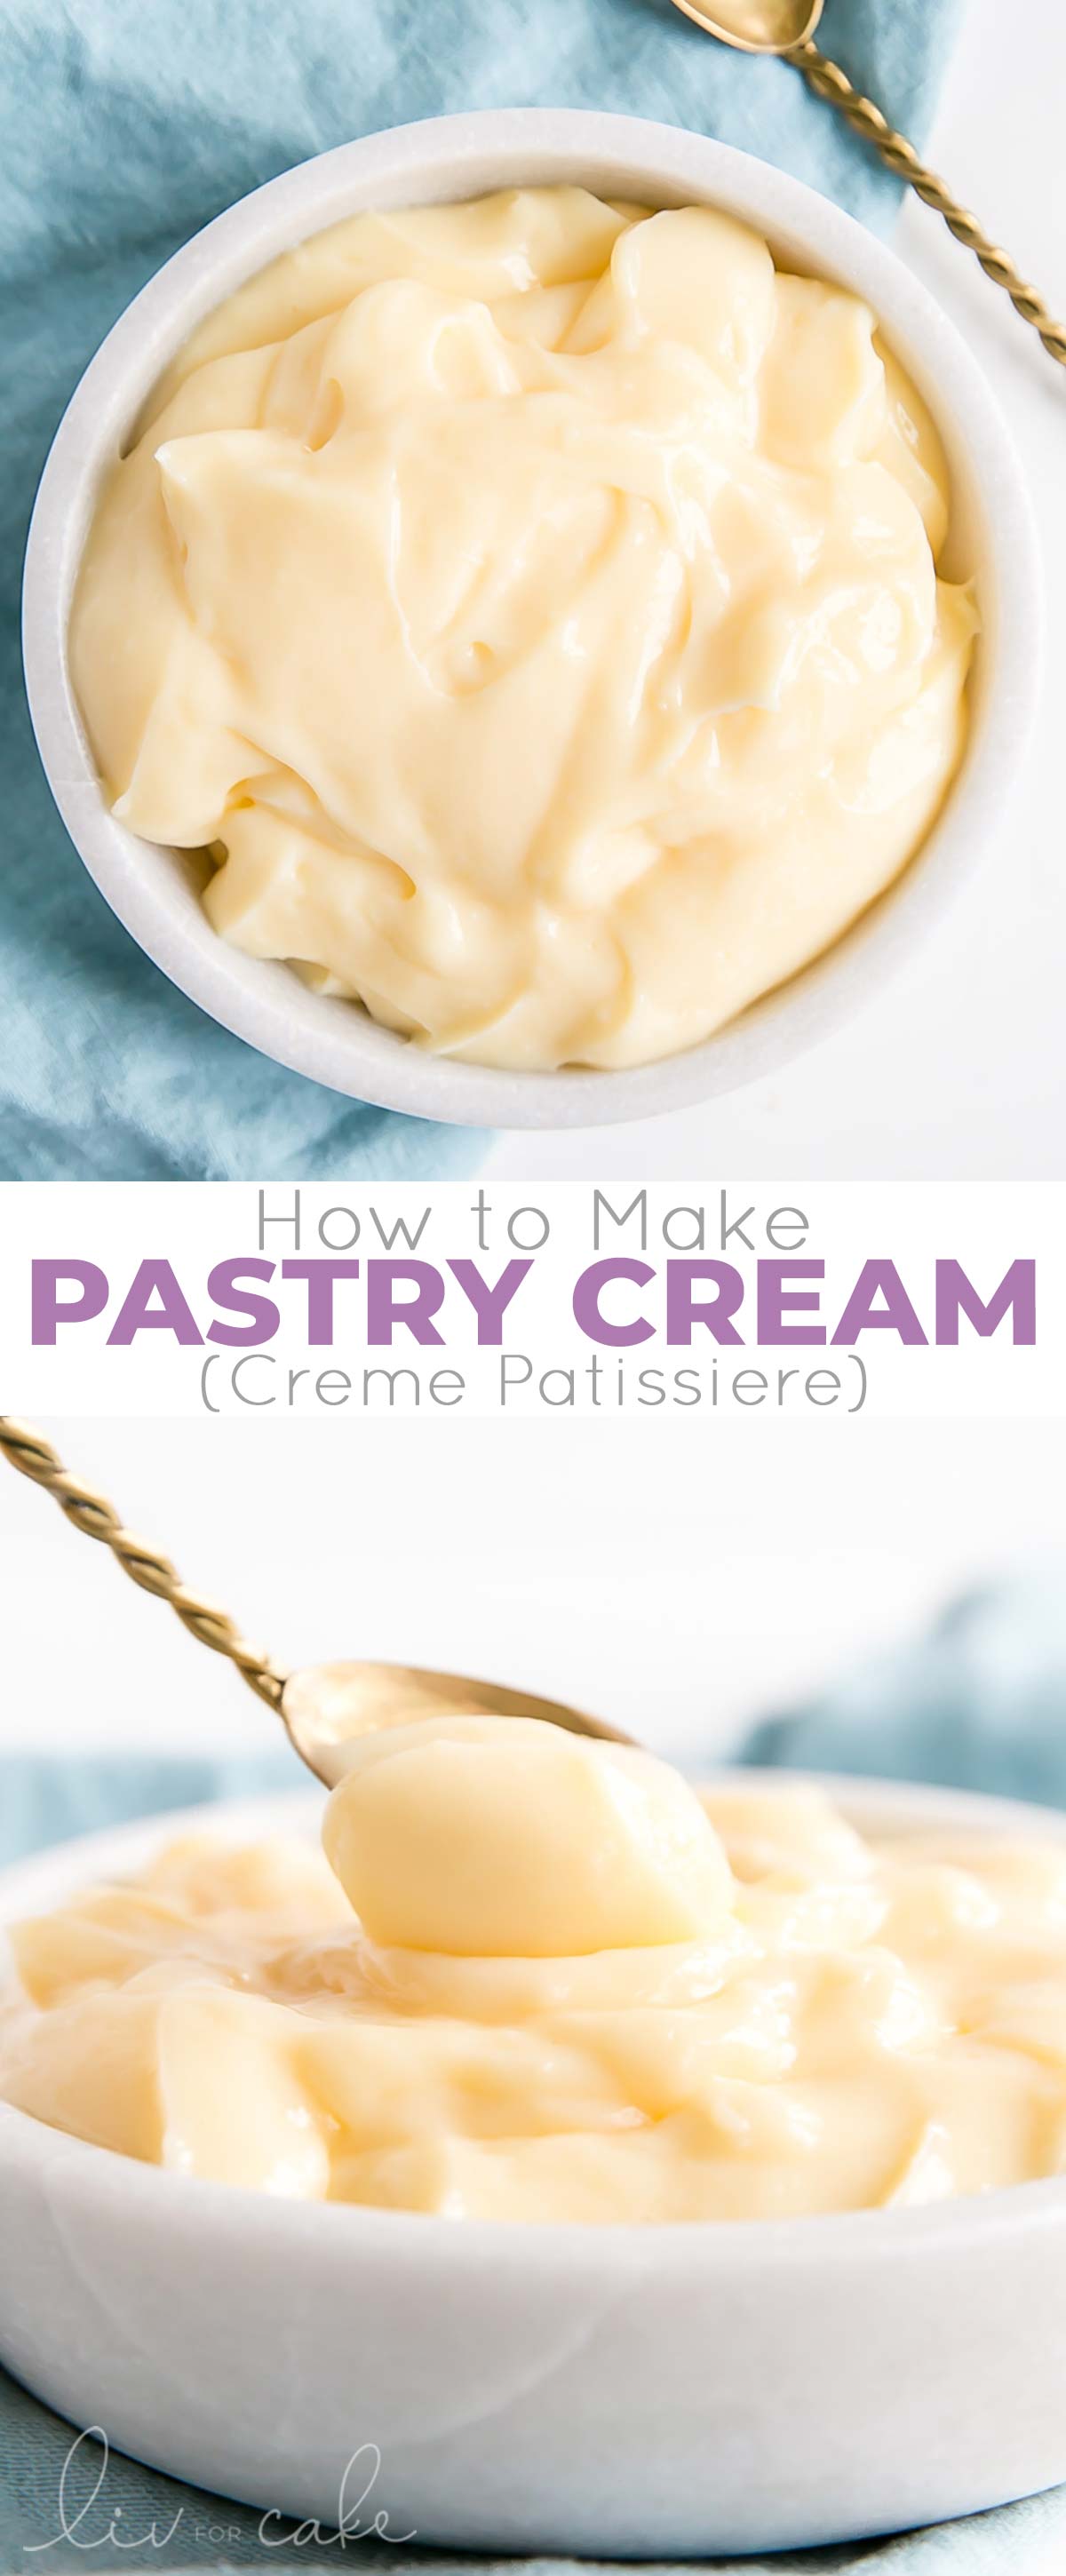 Pastry Cream (Creme Patissiere) photo collage